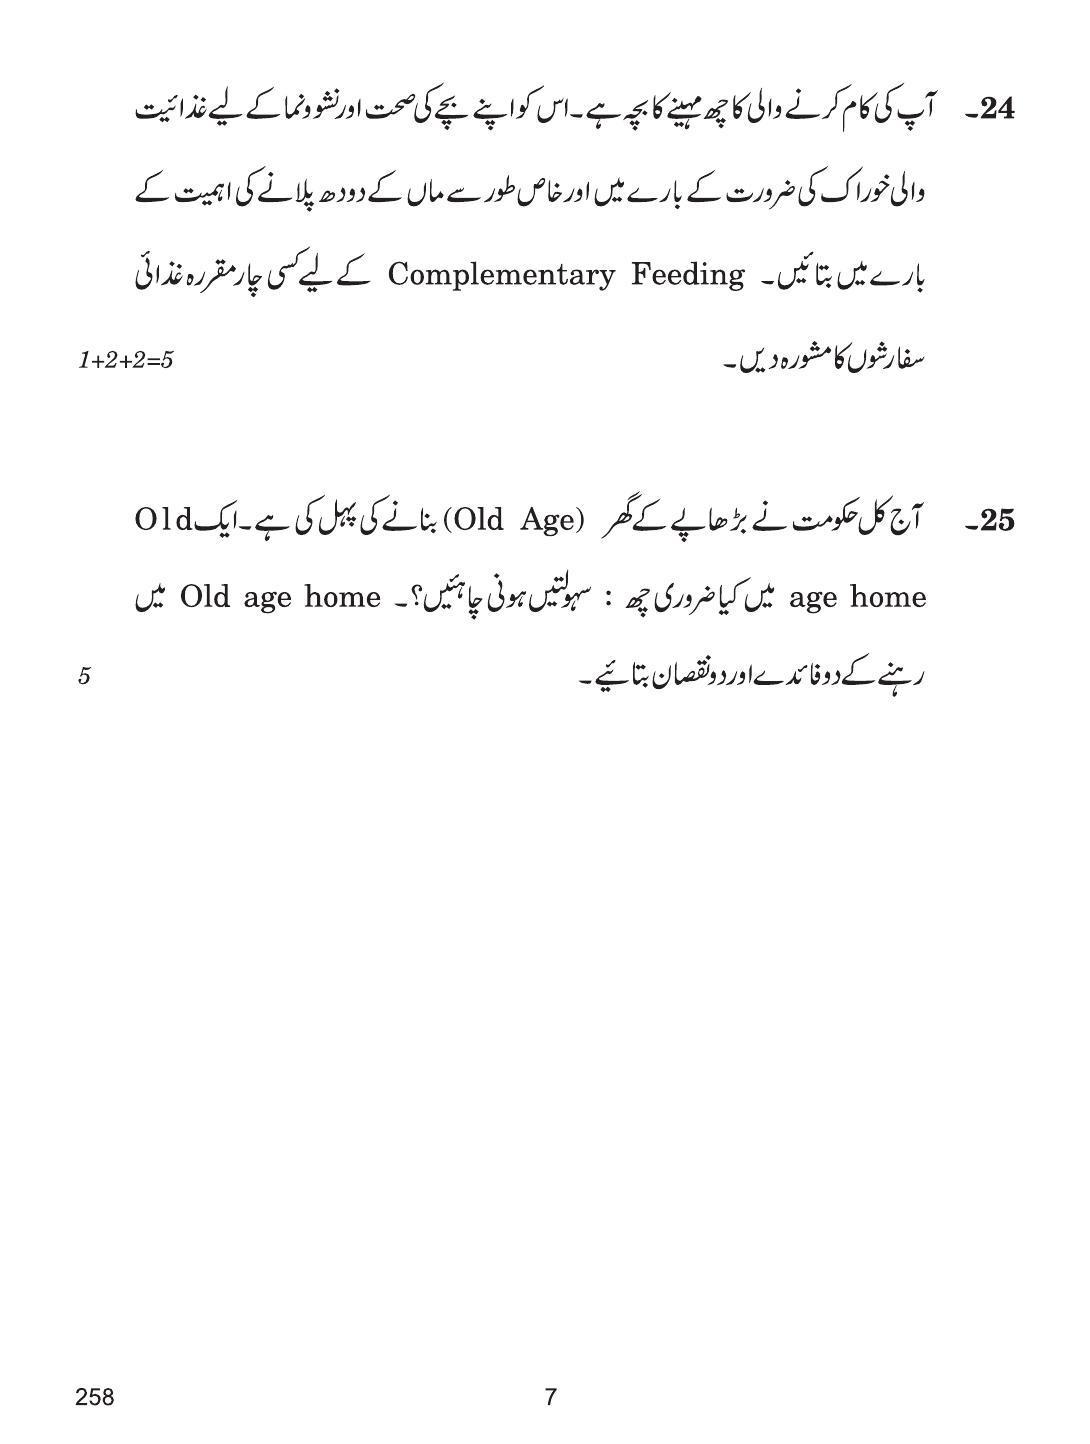 CBSE Class 12 258 (Home Science Urdu) 2018 Question Paper - Page 7